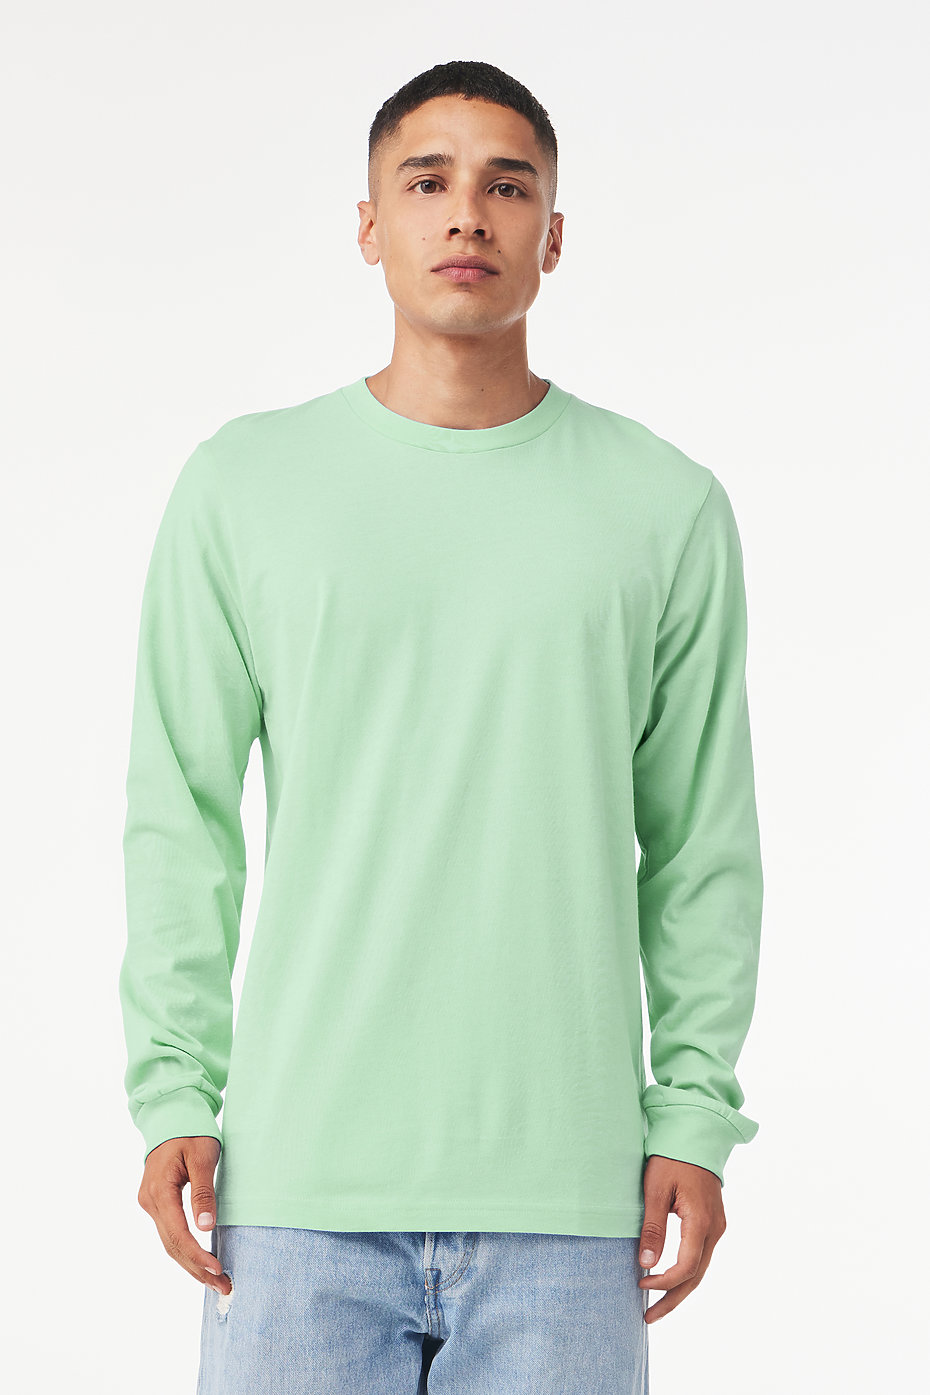 discount 99% Green S Arizona Vintage T-shirt WOMEN FASHION Shirts & T-shirts Ribbed 